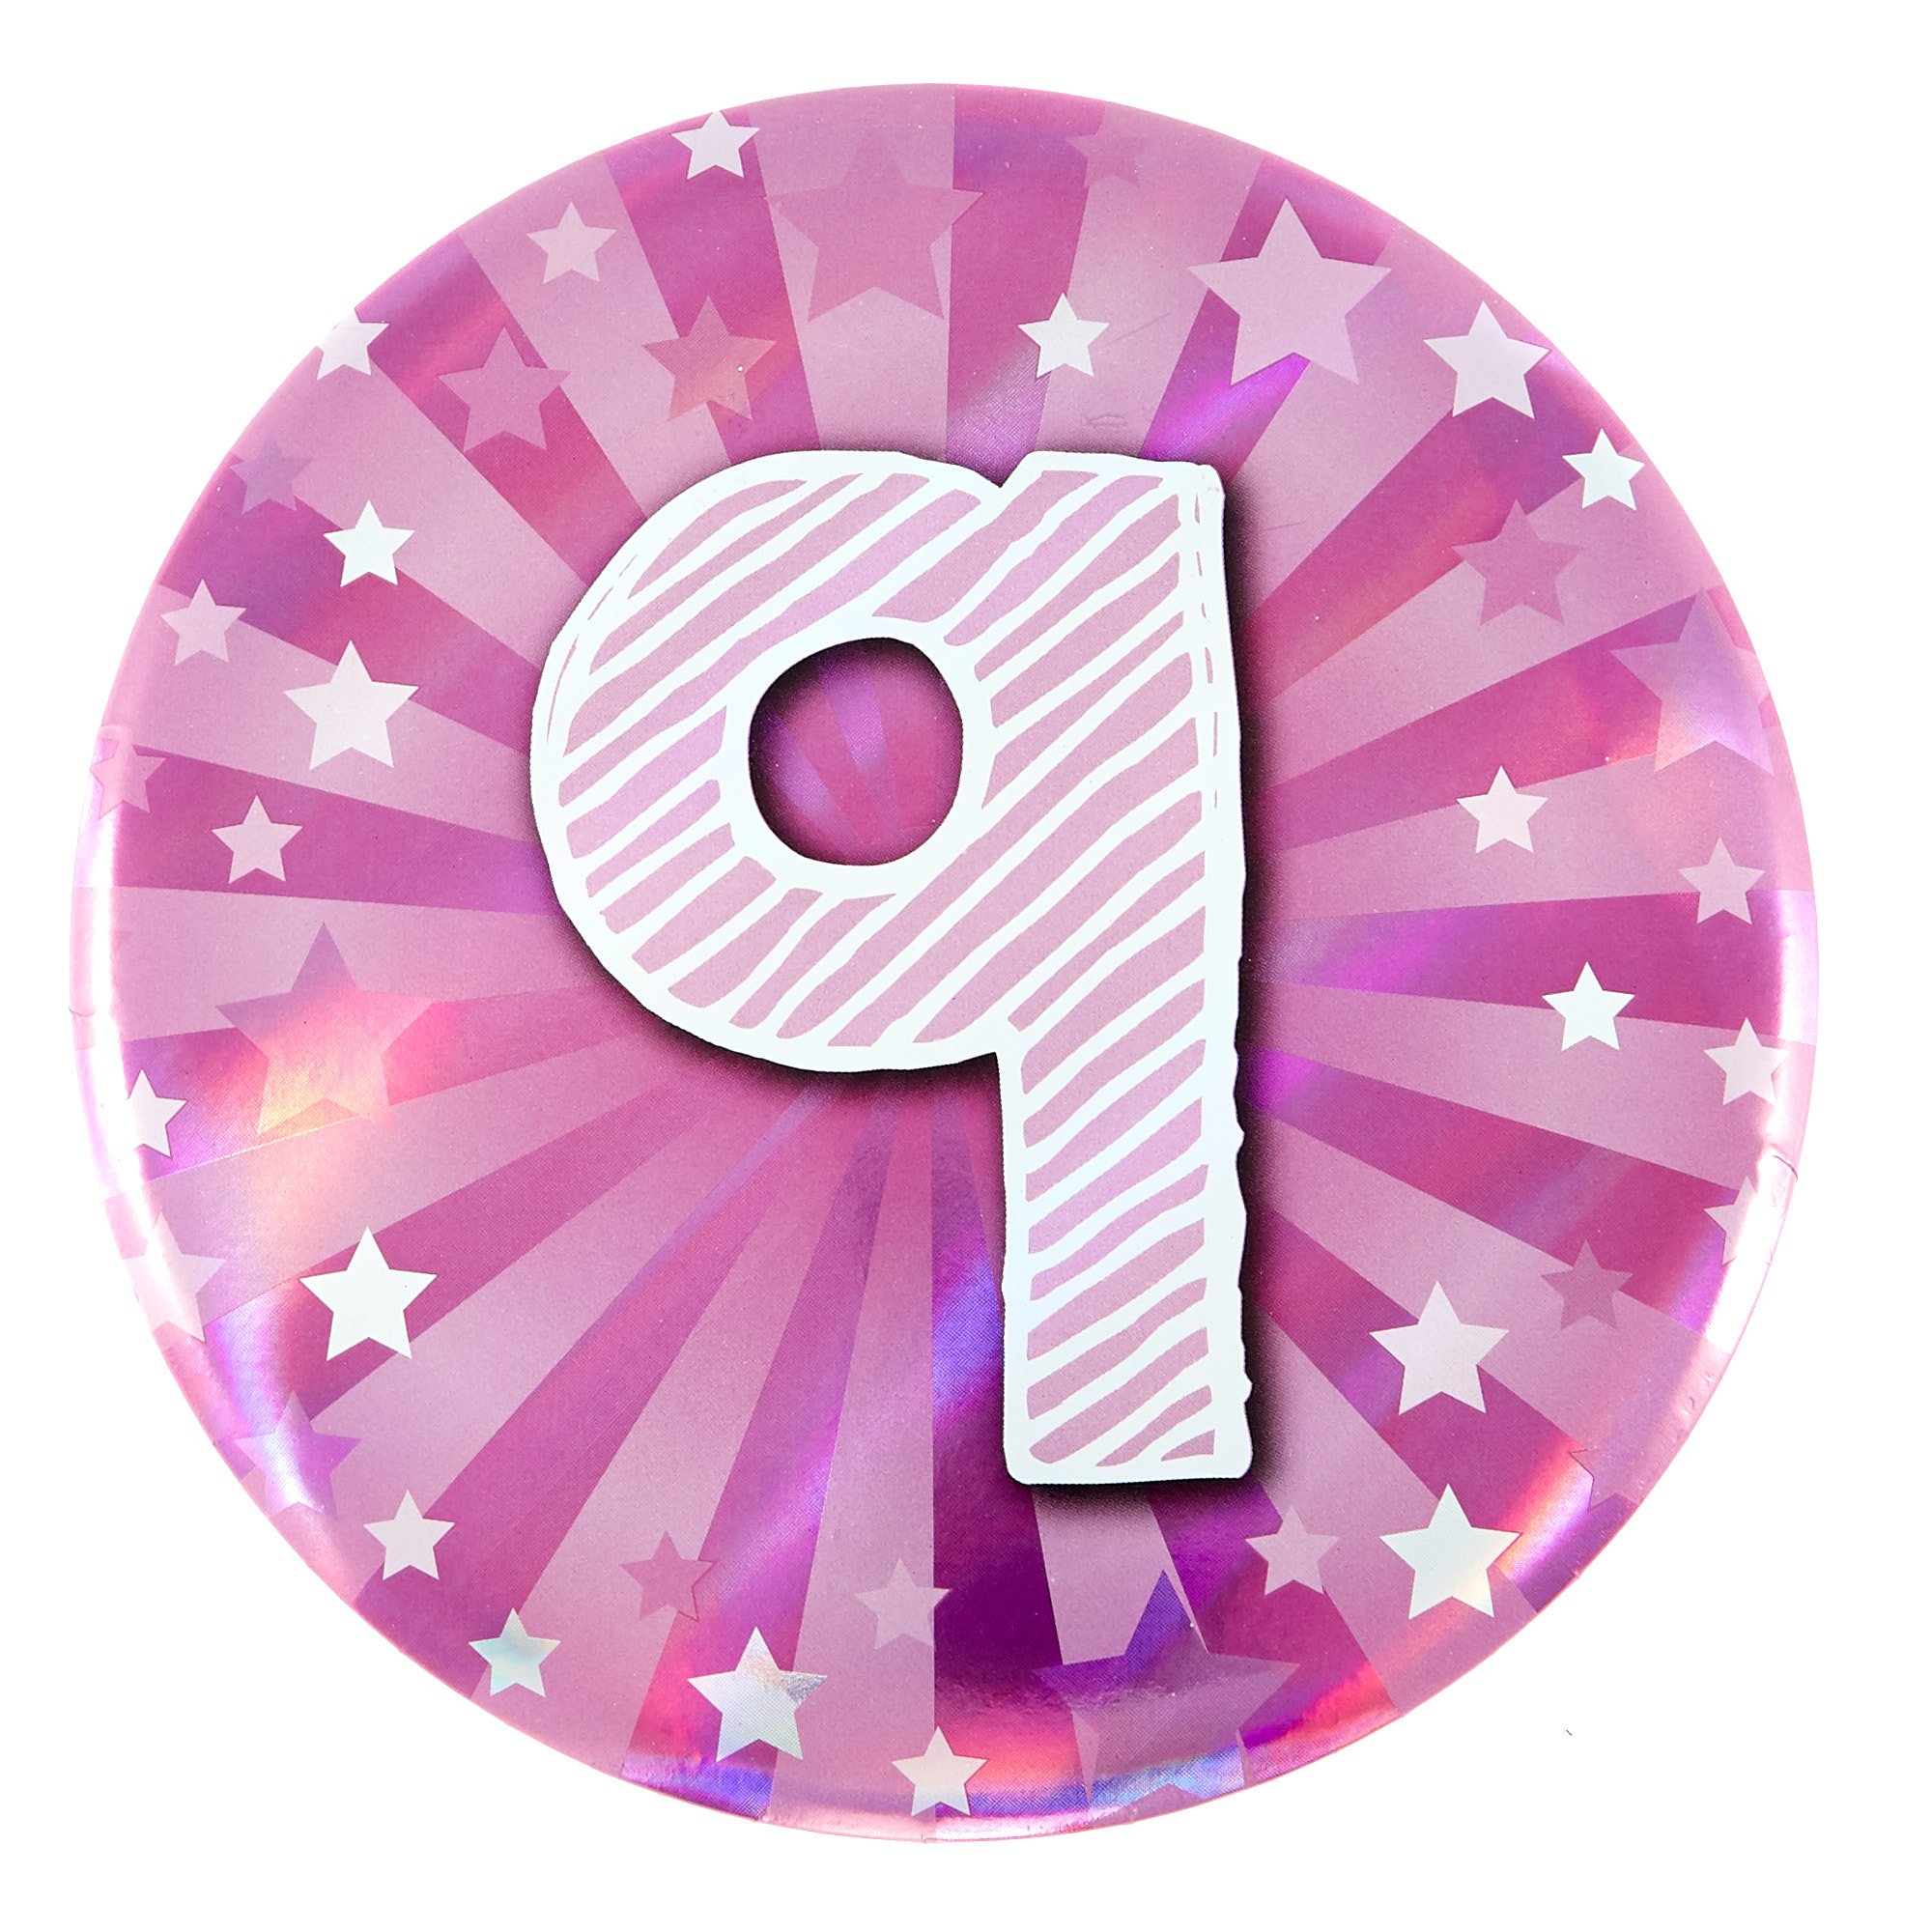 Giant 9th Birthday Badge - Pink